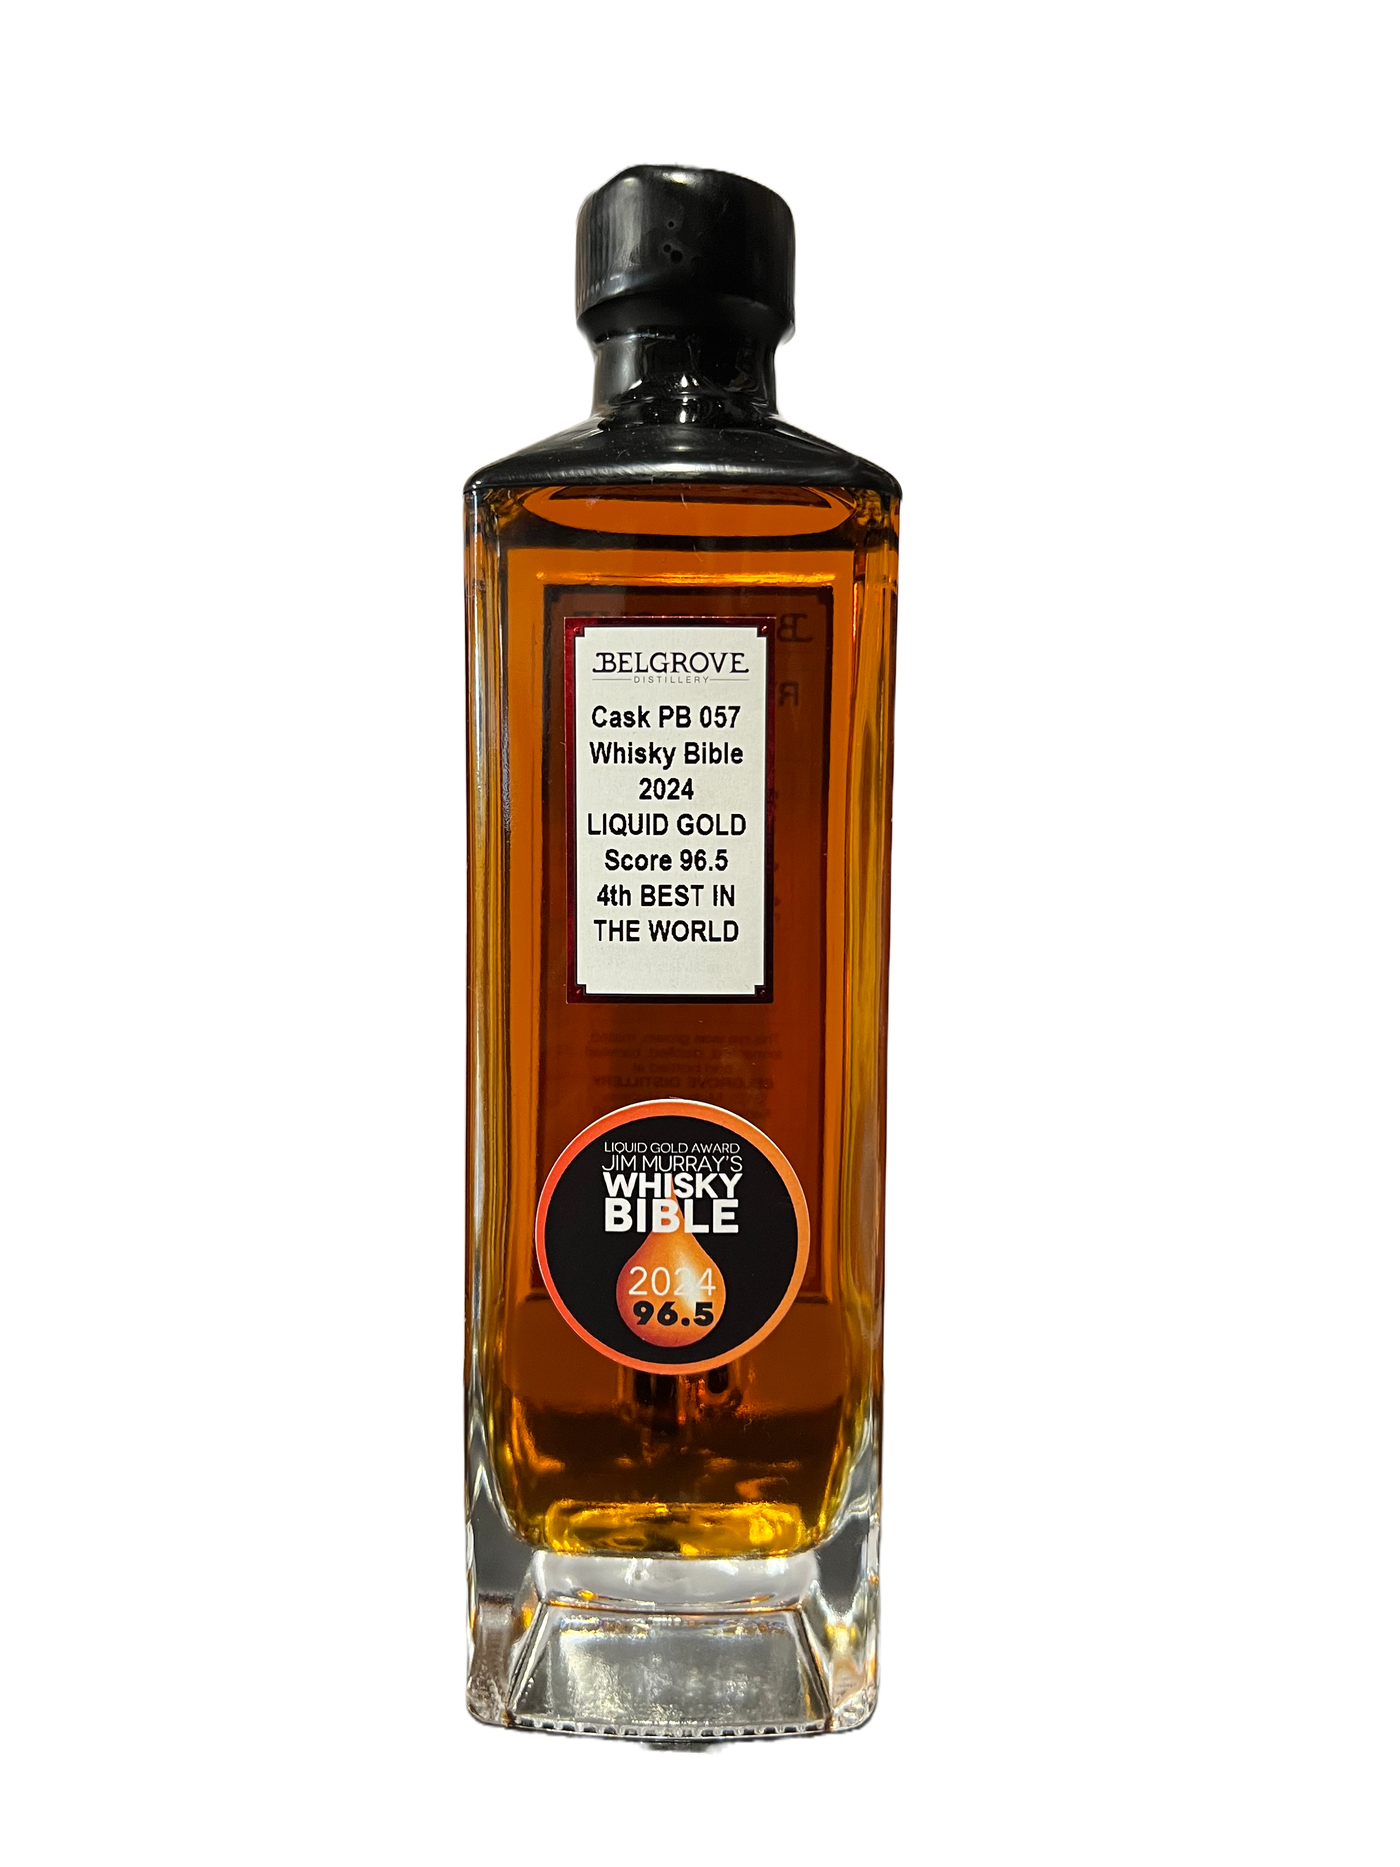 Rye Whisky PB 057 - 67.2% - Whisky Bible’s Liquid Gold Score, Australia’s best whisky, & The world’s 4th best.